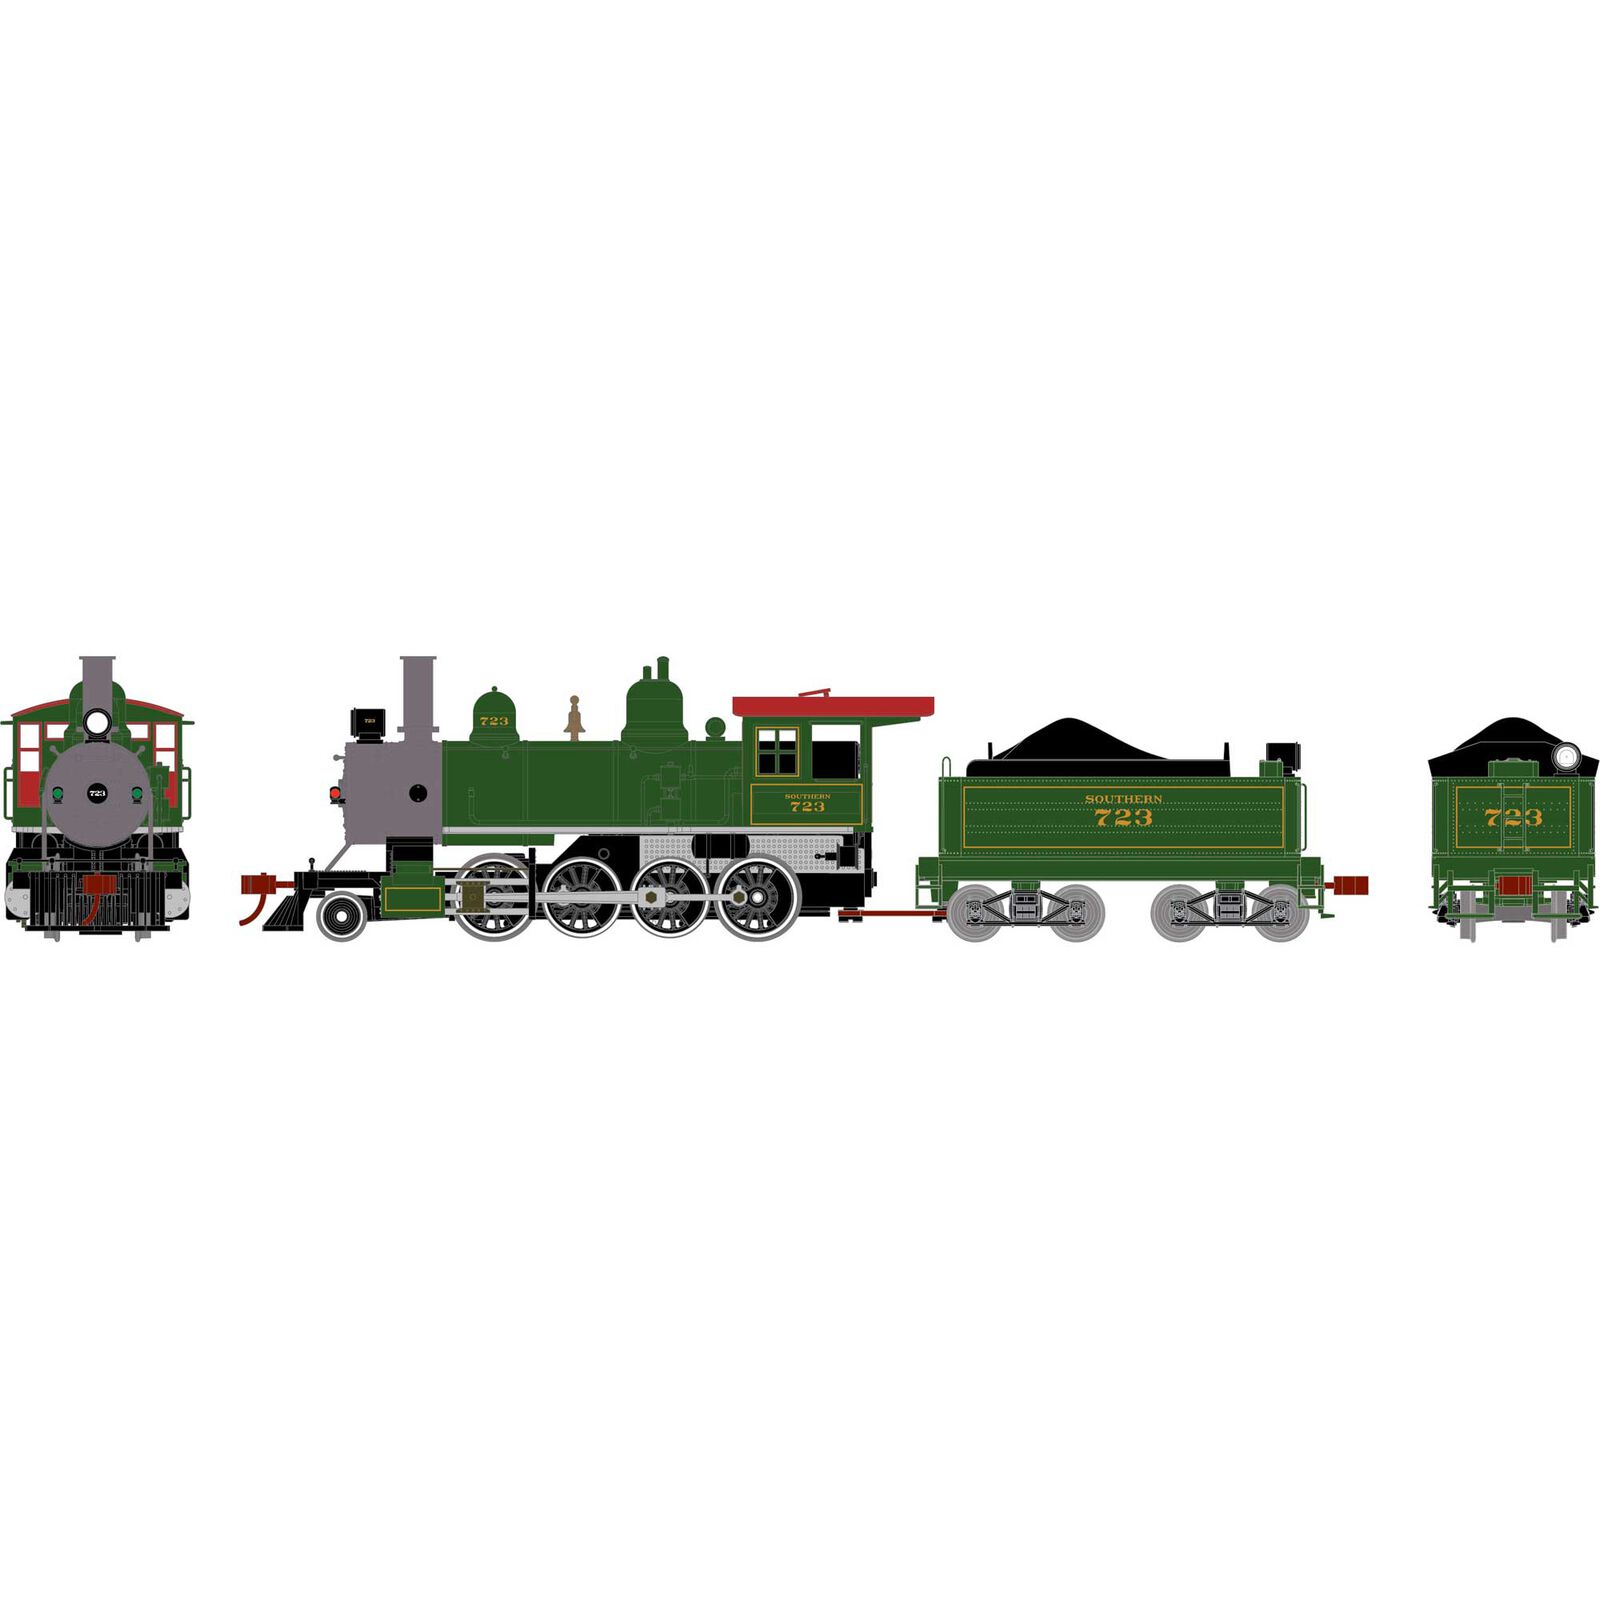 HO Old Time 2-8-0 Locomotive with DCC & Sound, SOU #723